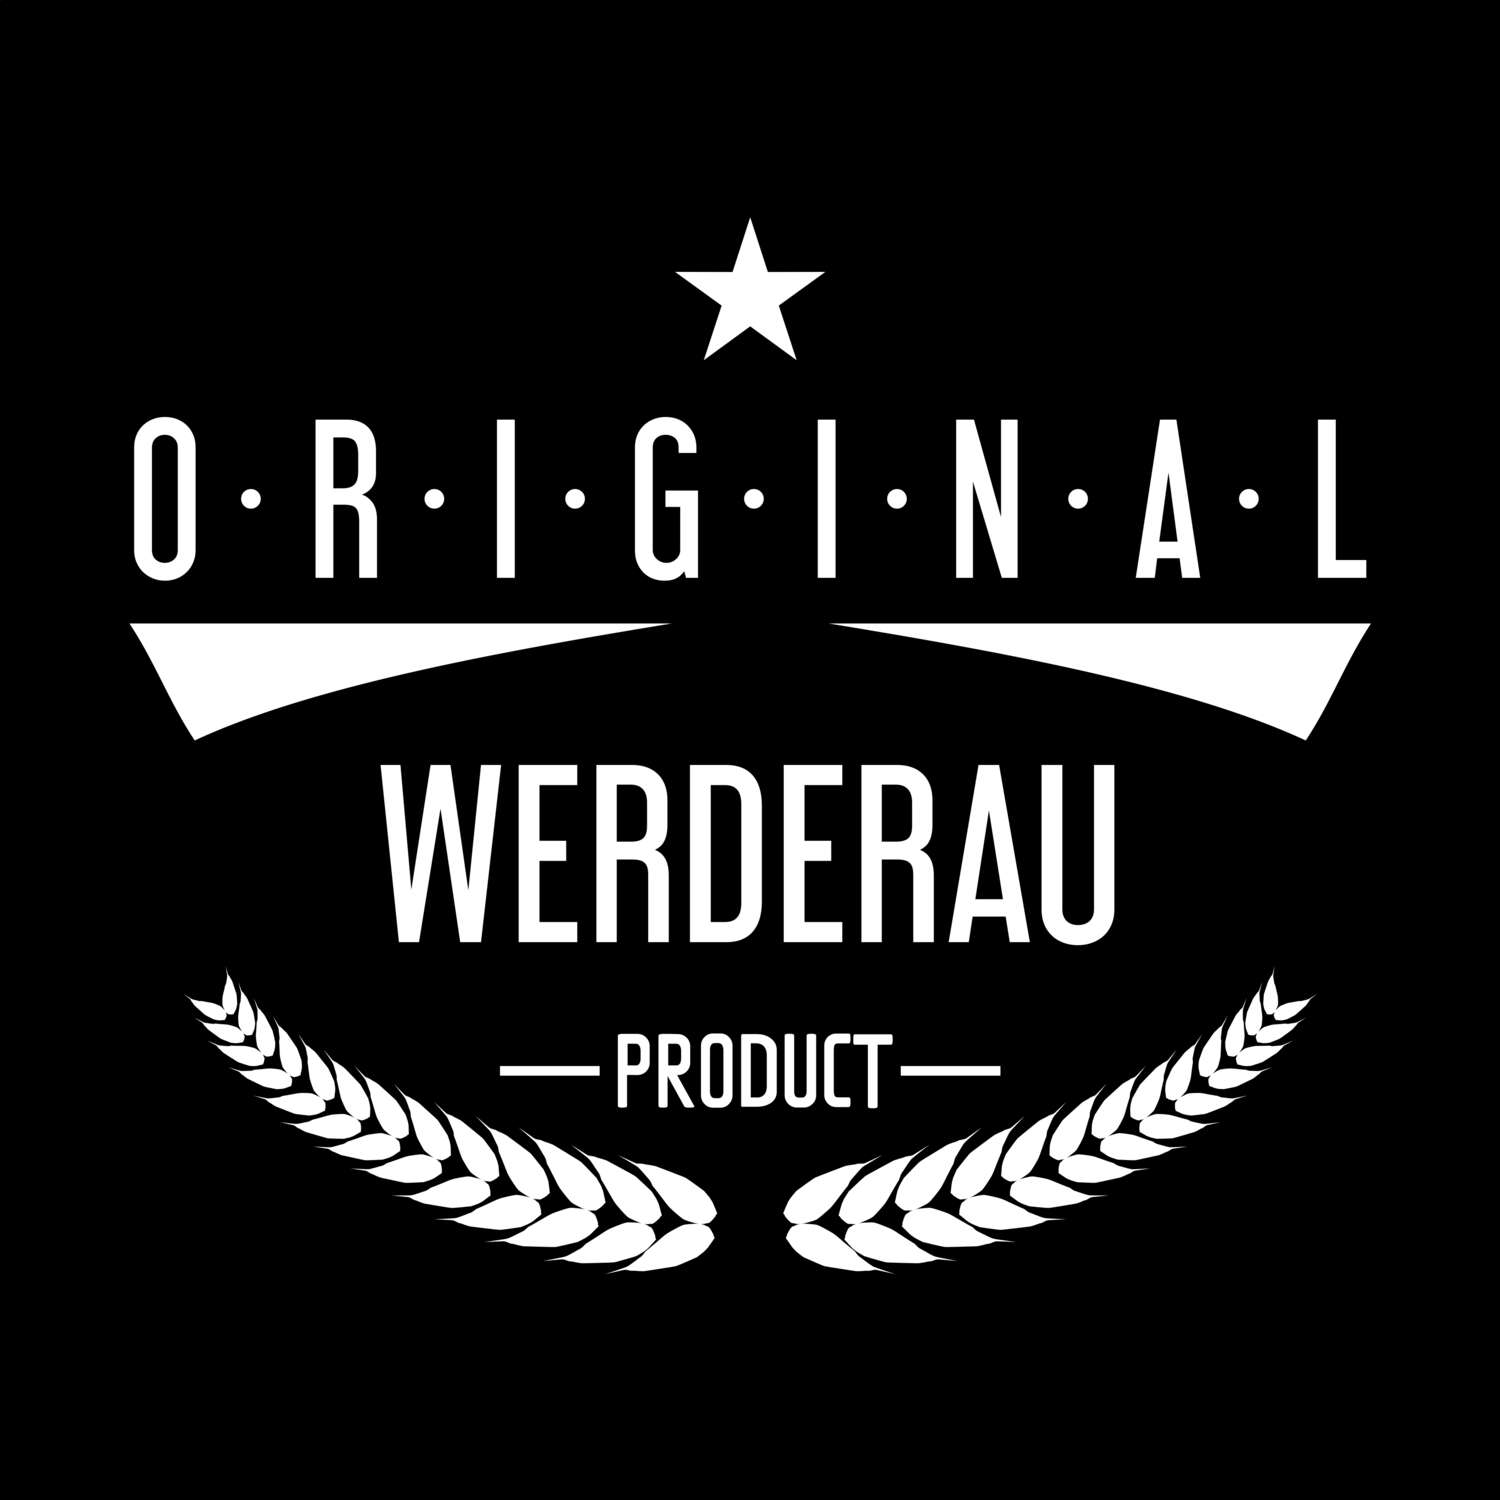 Werderau T-Shirt »Original Product«